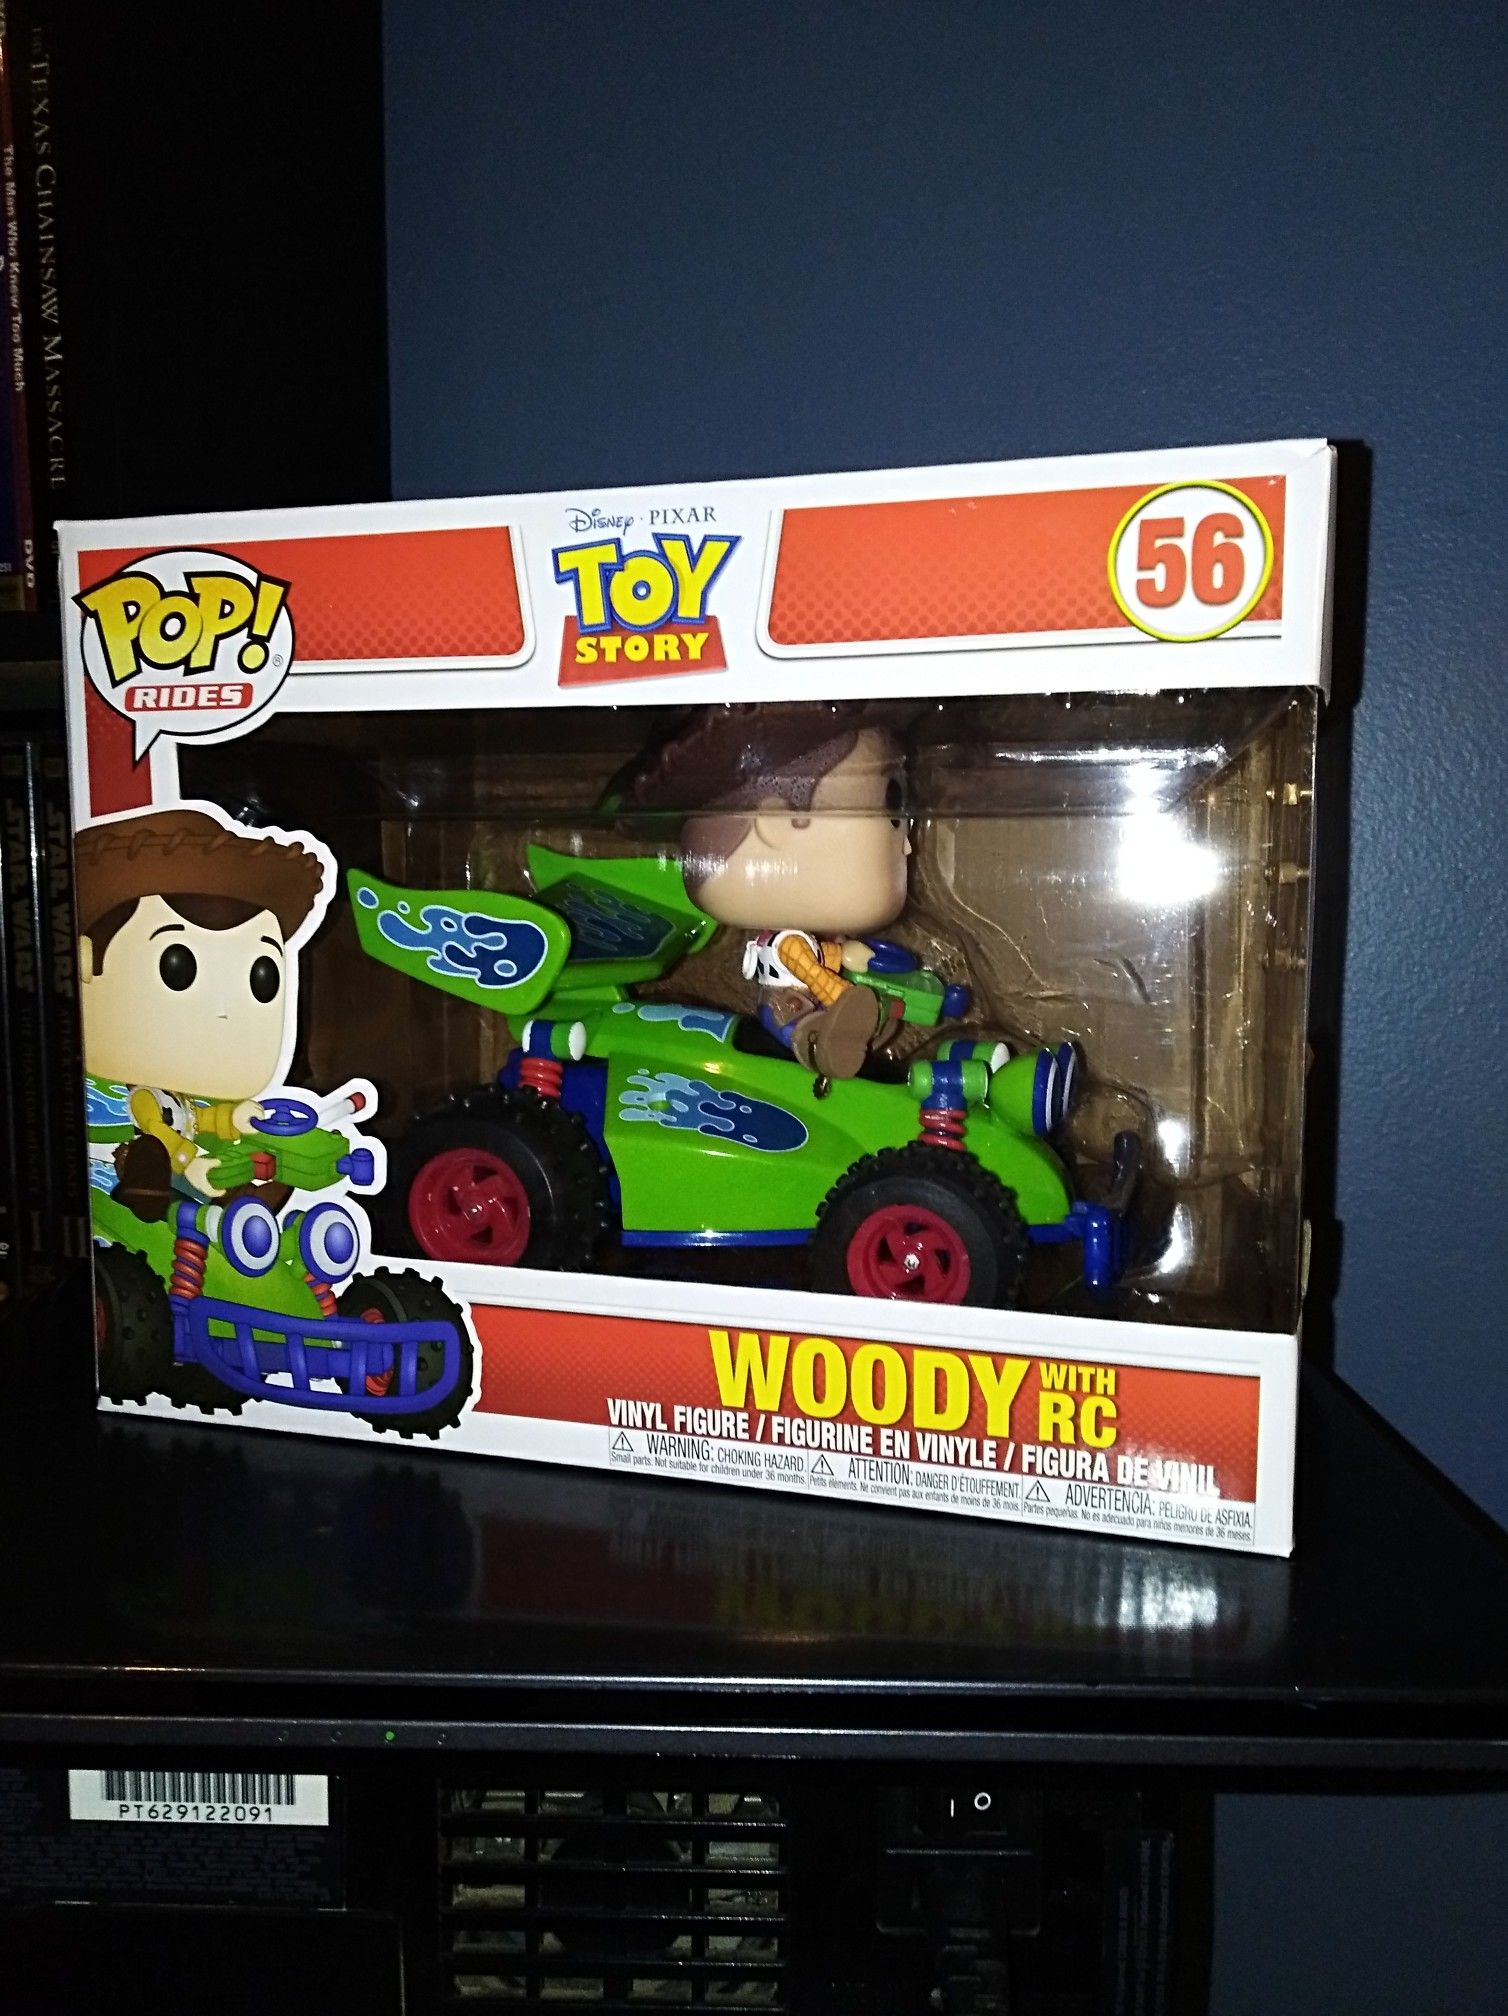 Woody with RC Funko Pop Ride Toy Story Disney vinyl figure display